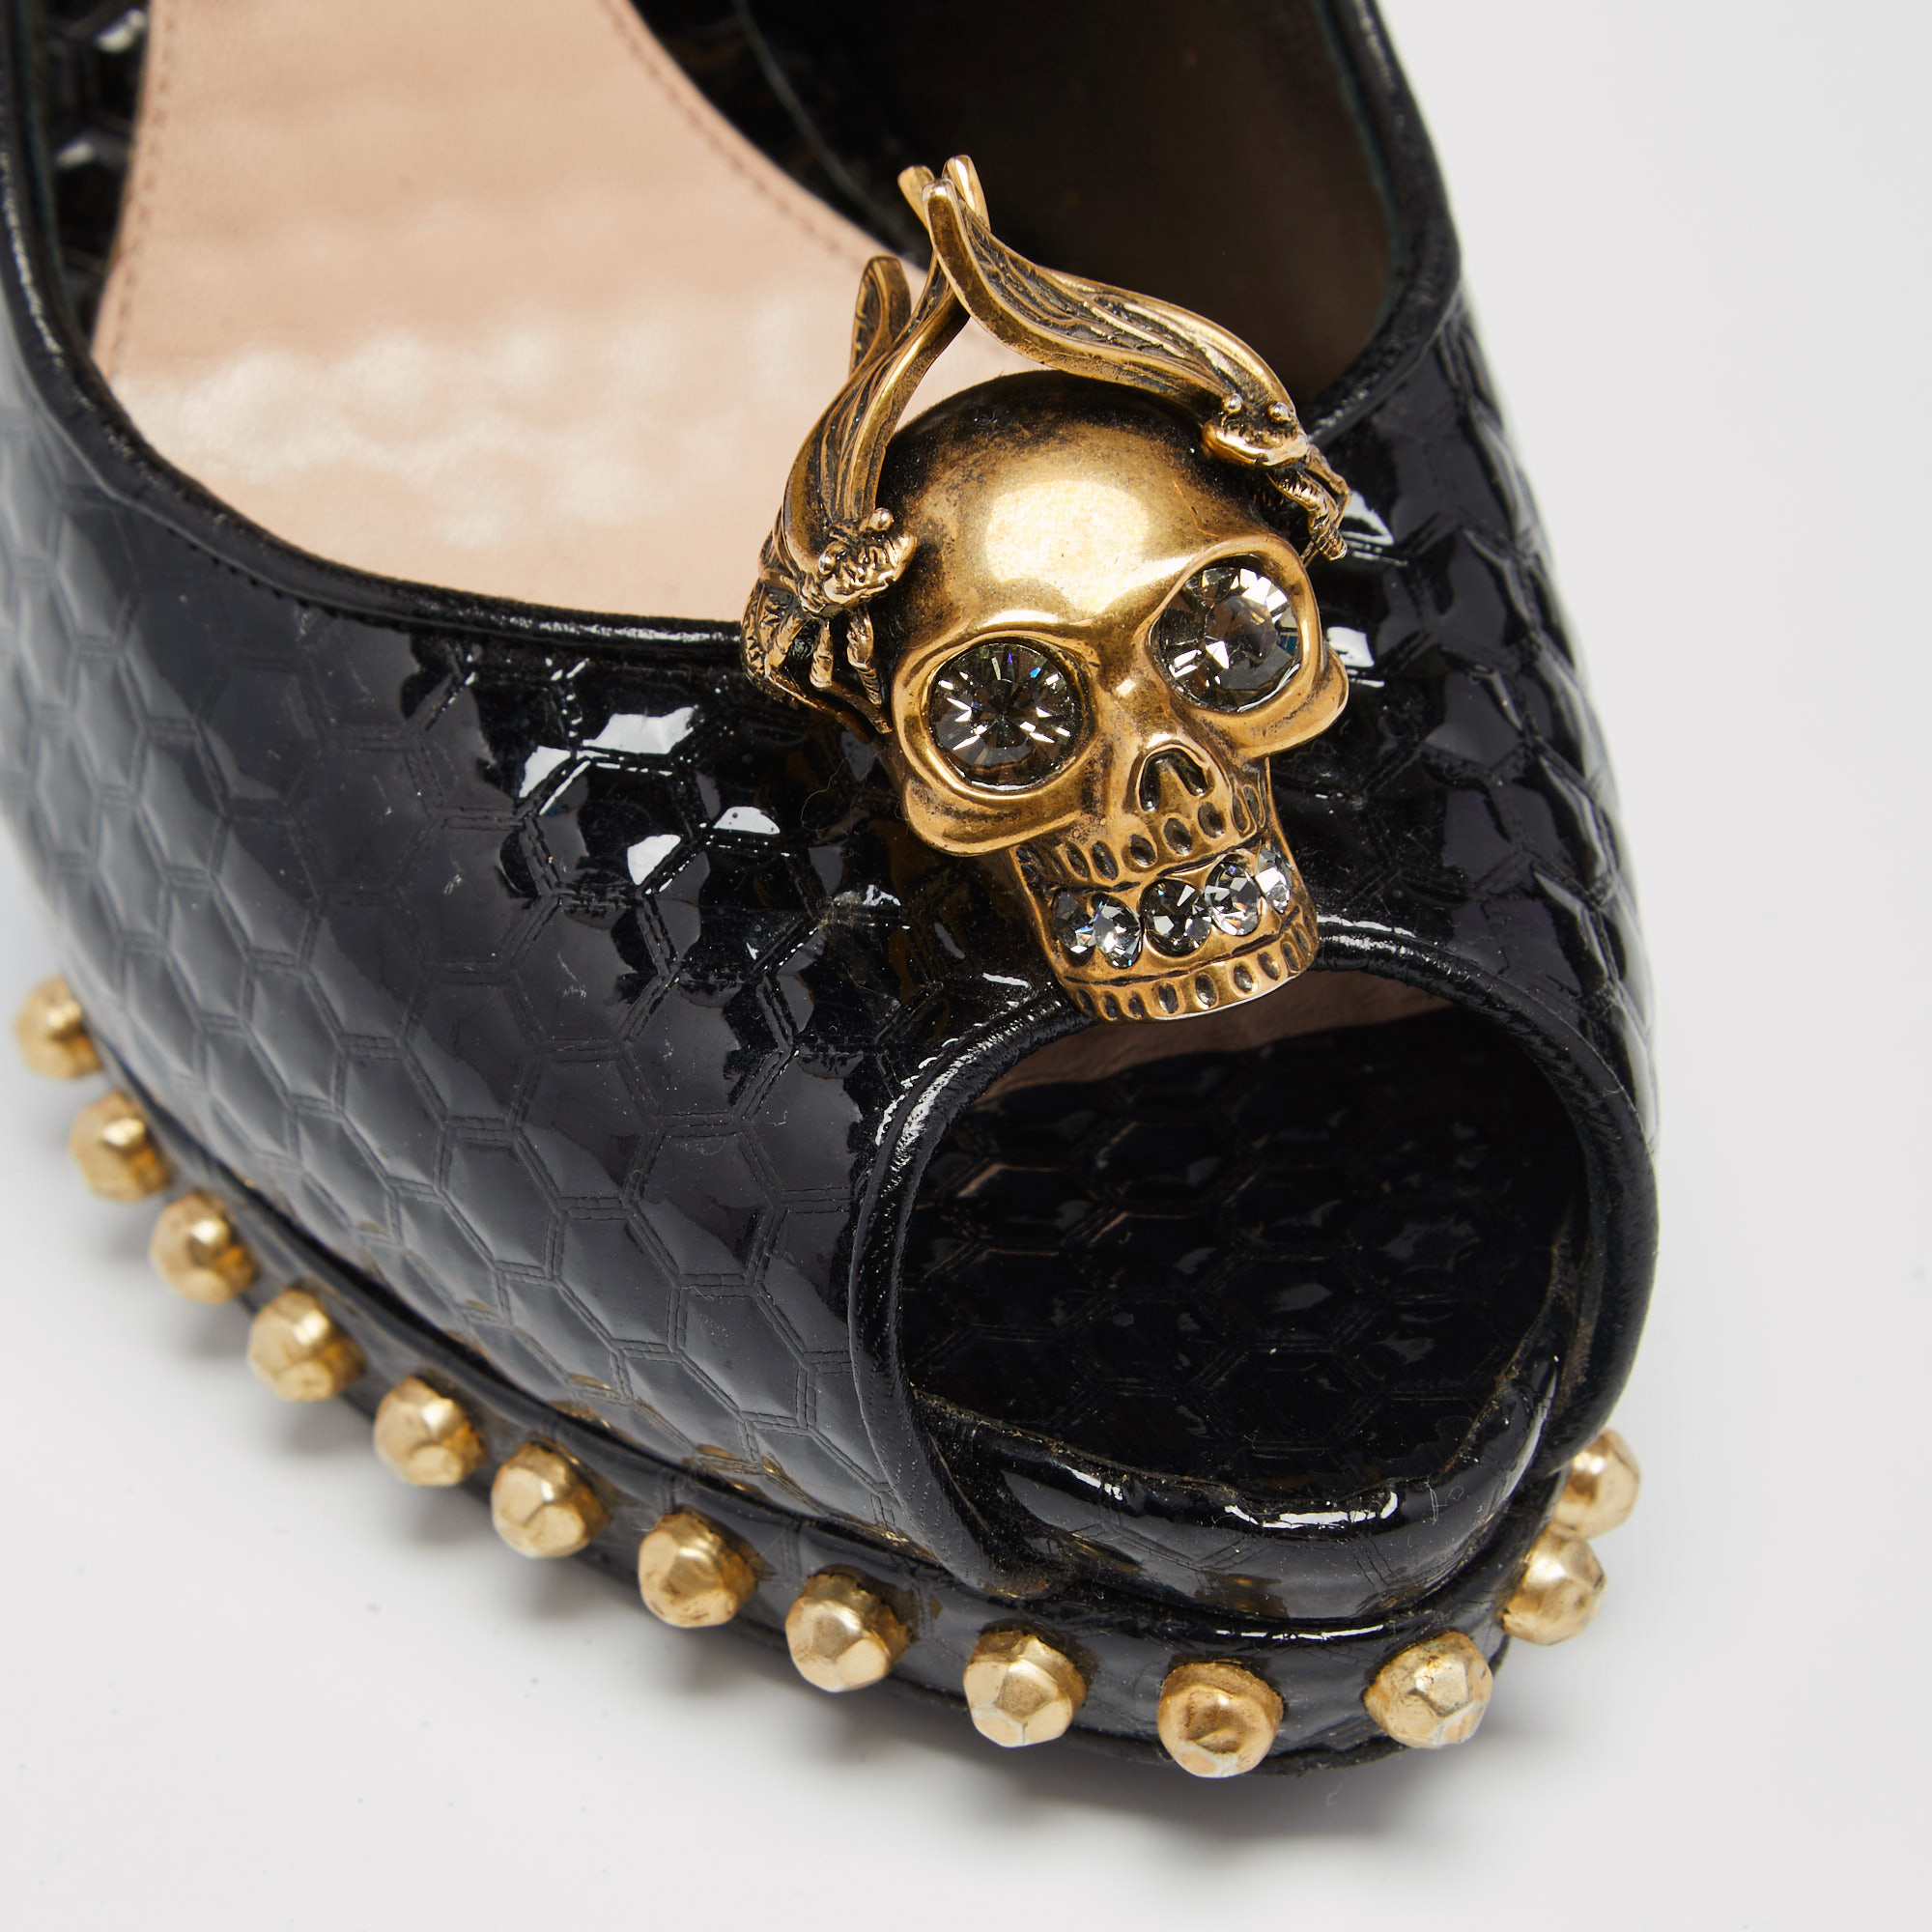 Alexander McQueen Black Patent Leather Skull Embellished Peep Toe Pumps Size 38